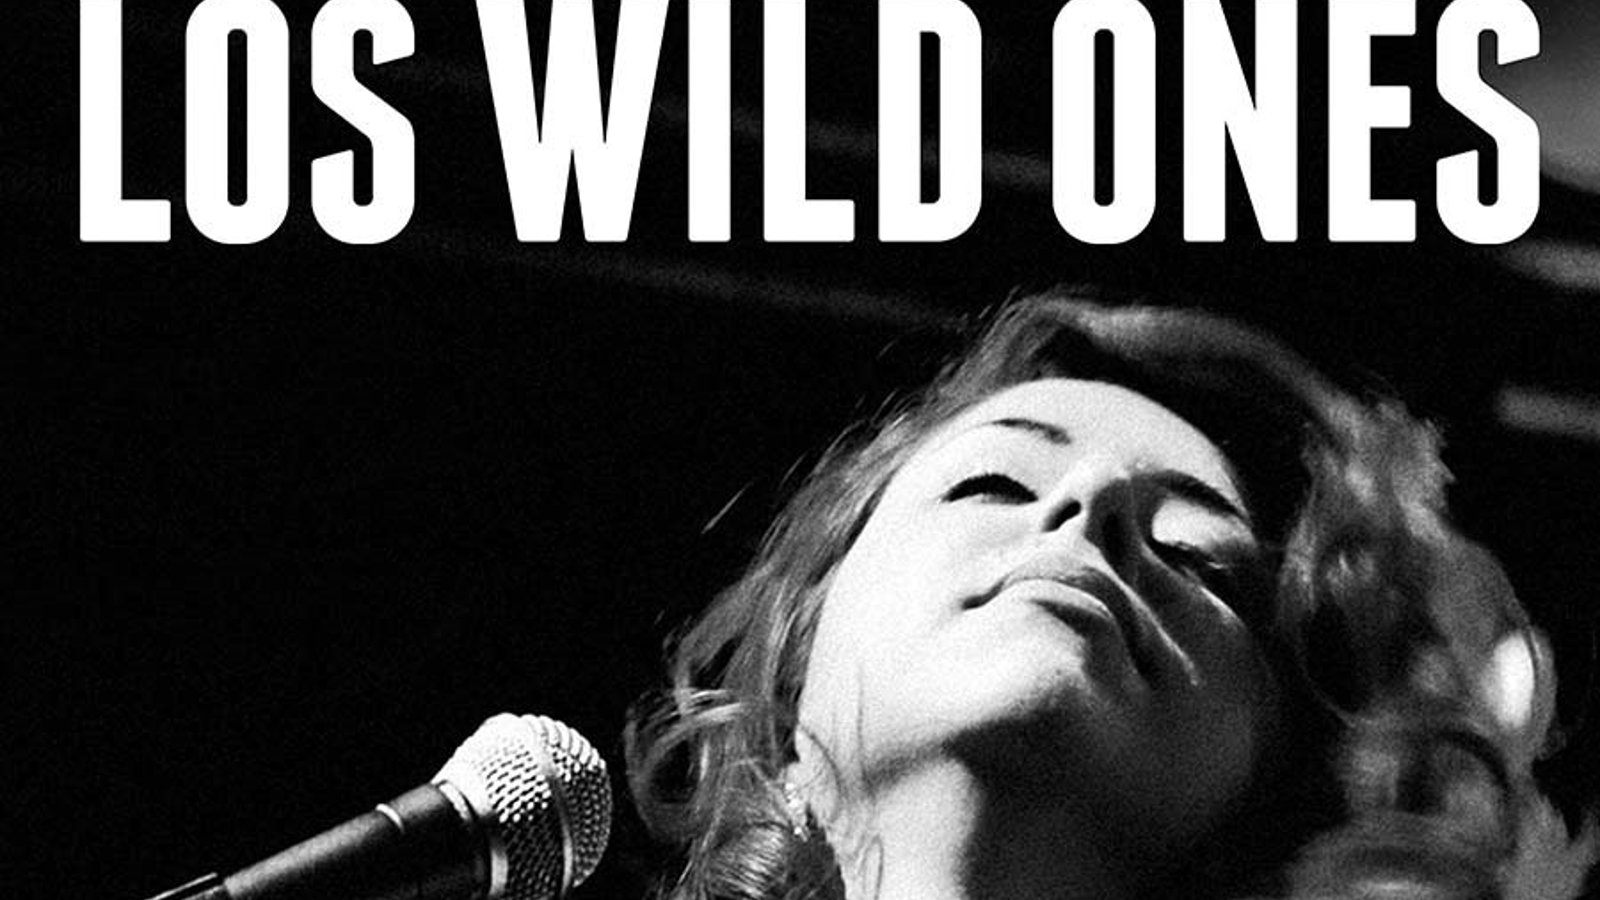 Los Wild Ones - The Musicians of Wild Records